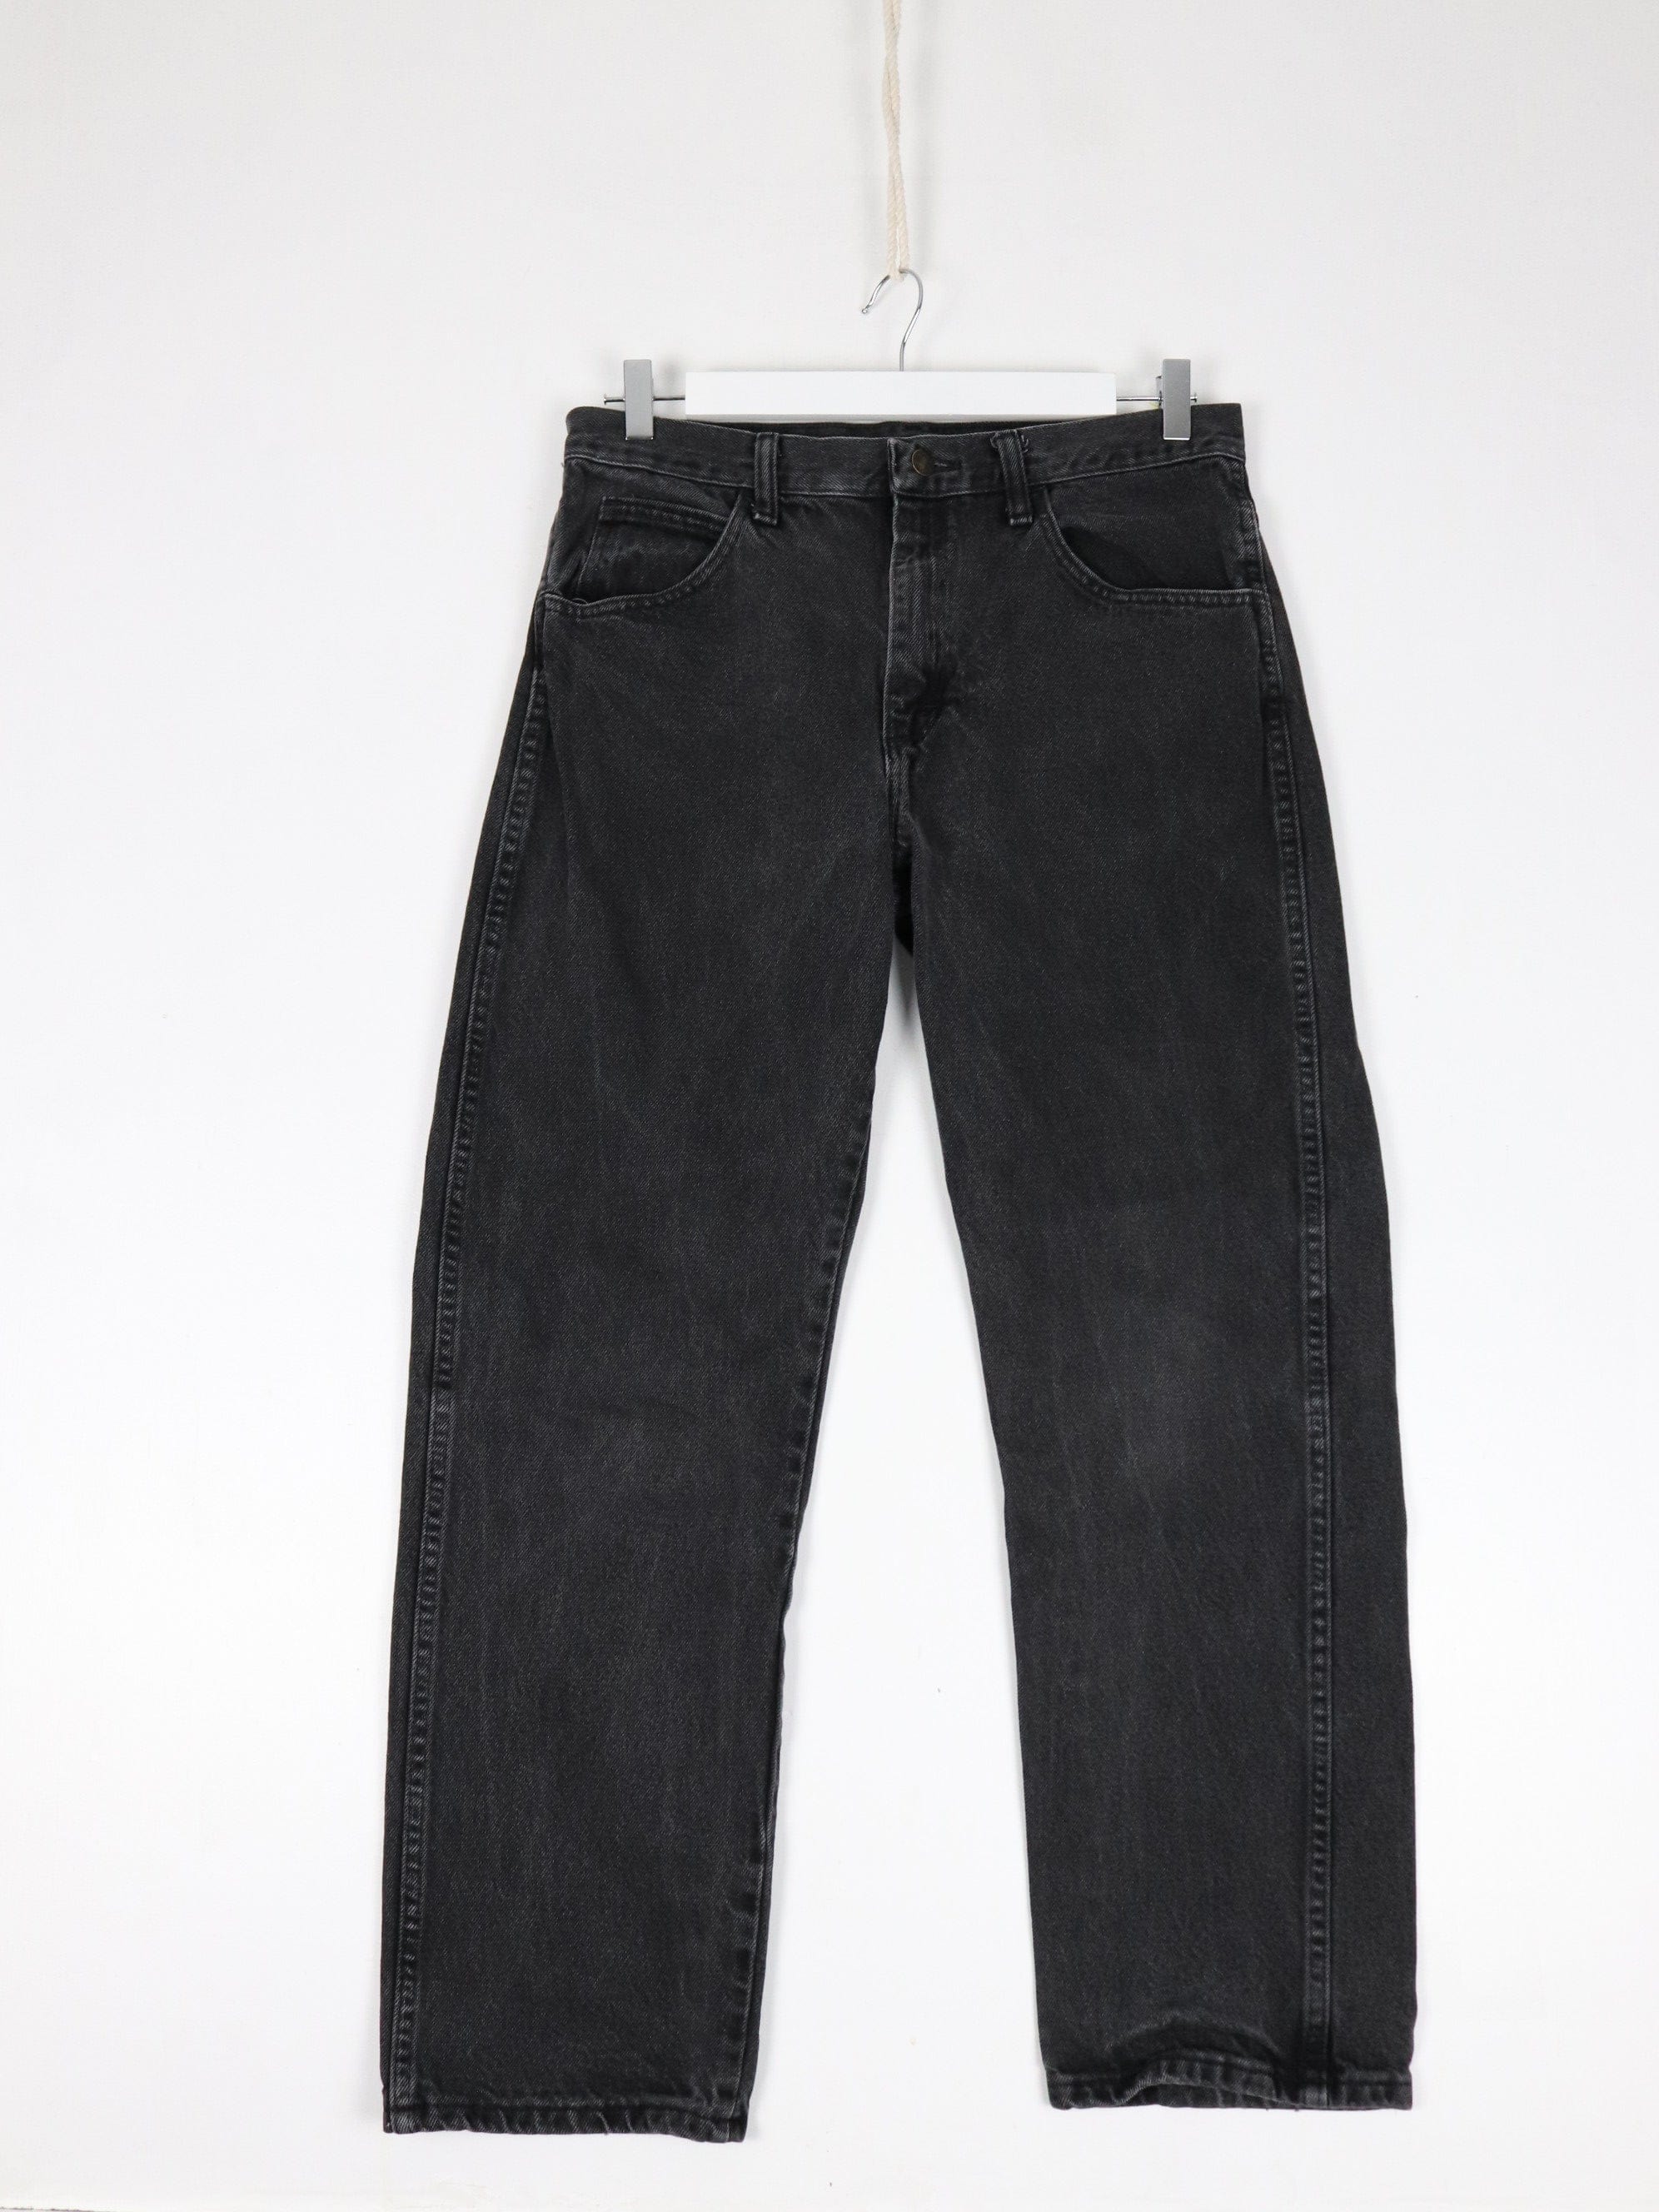 Vintage Rustler Pants Mens 33 x 30 Black Denim Jeans